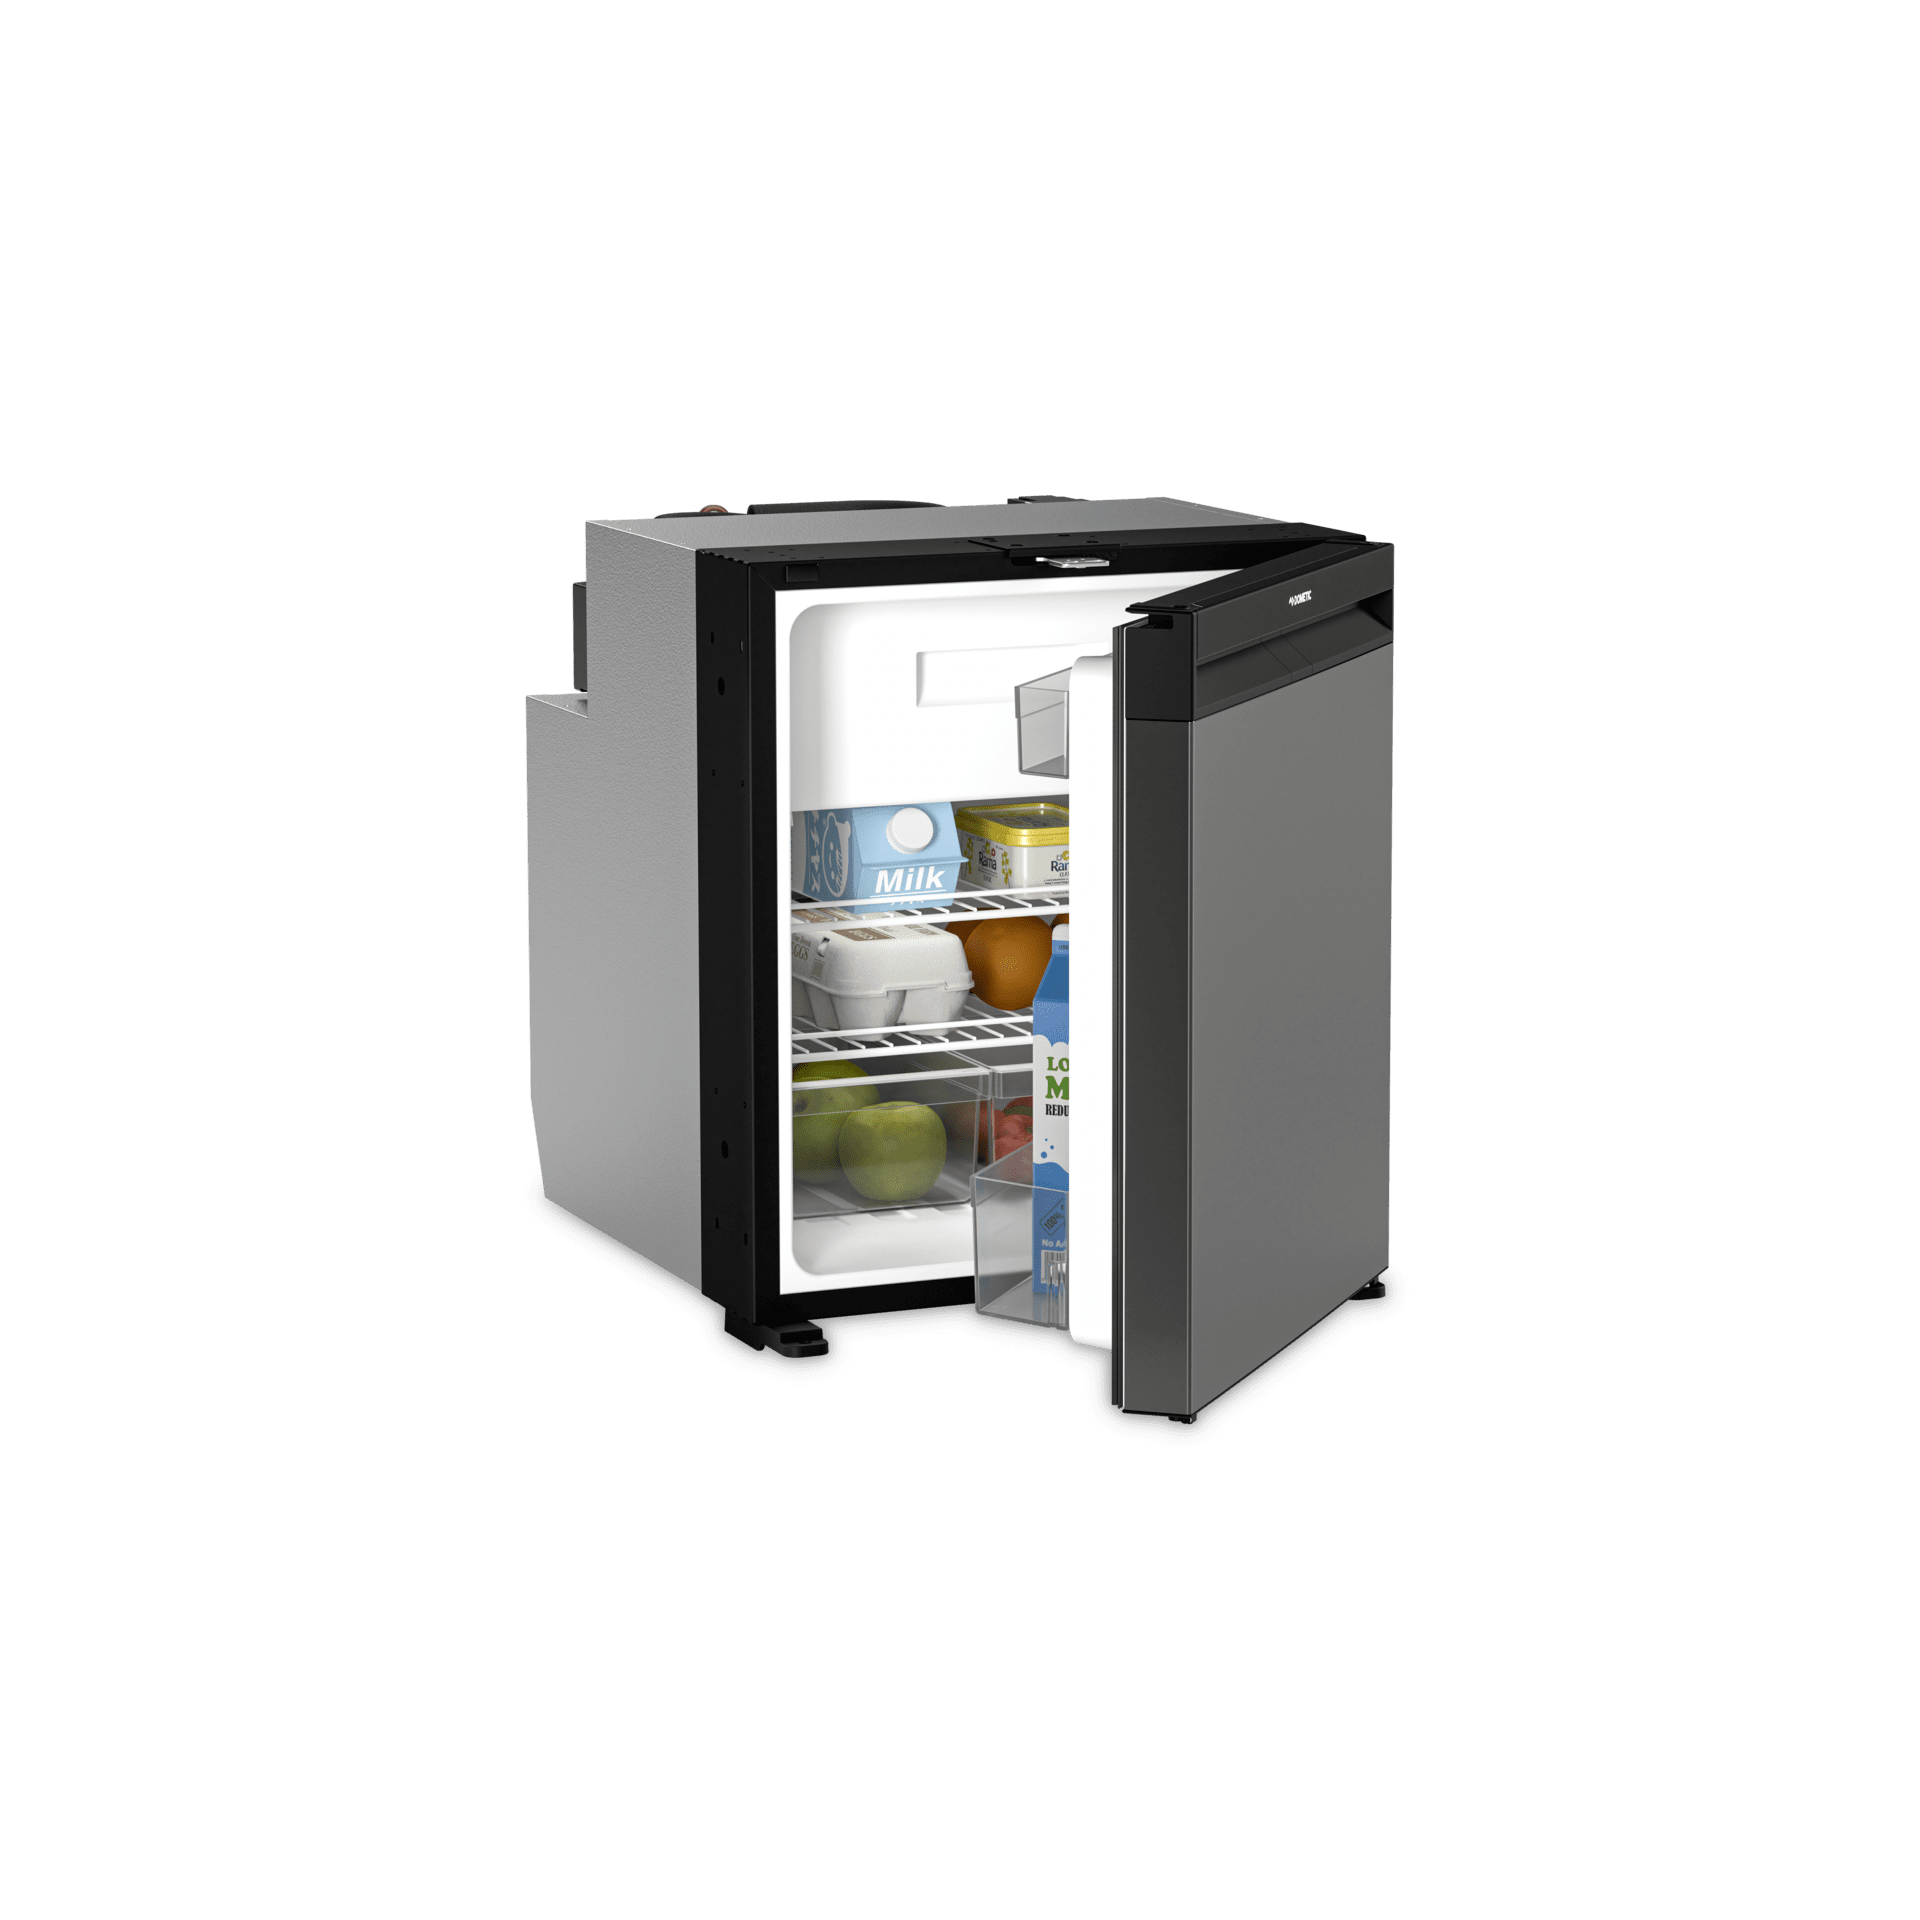 DOMETIC Coolmatic CRX 80 Kompressor-Kühlschrank, 78 Liter, in